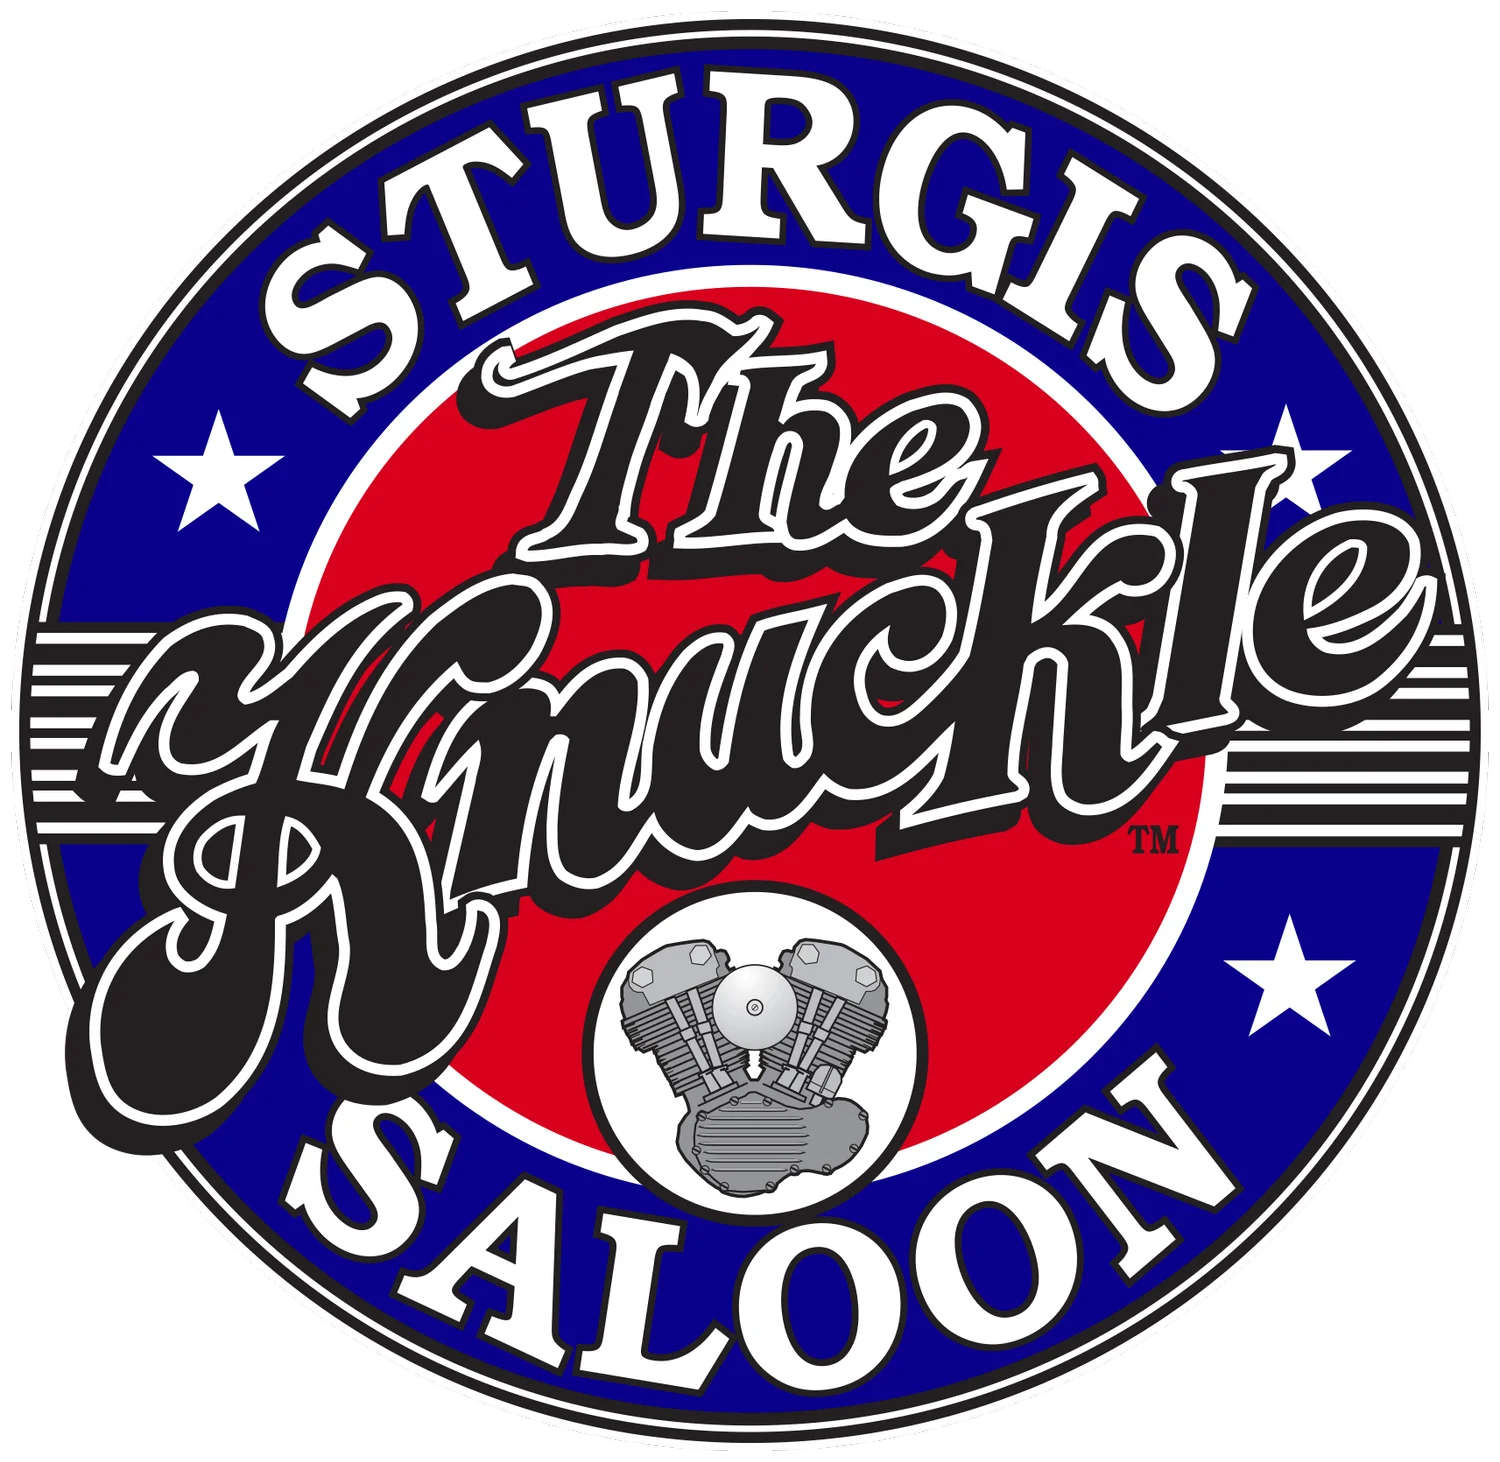 The Knuckle Saloon logo